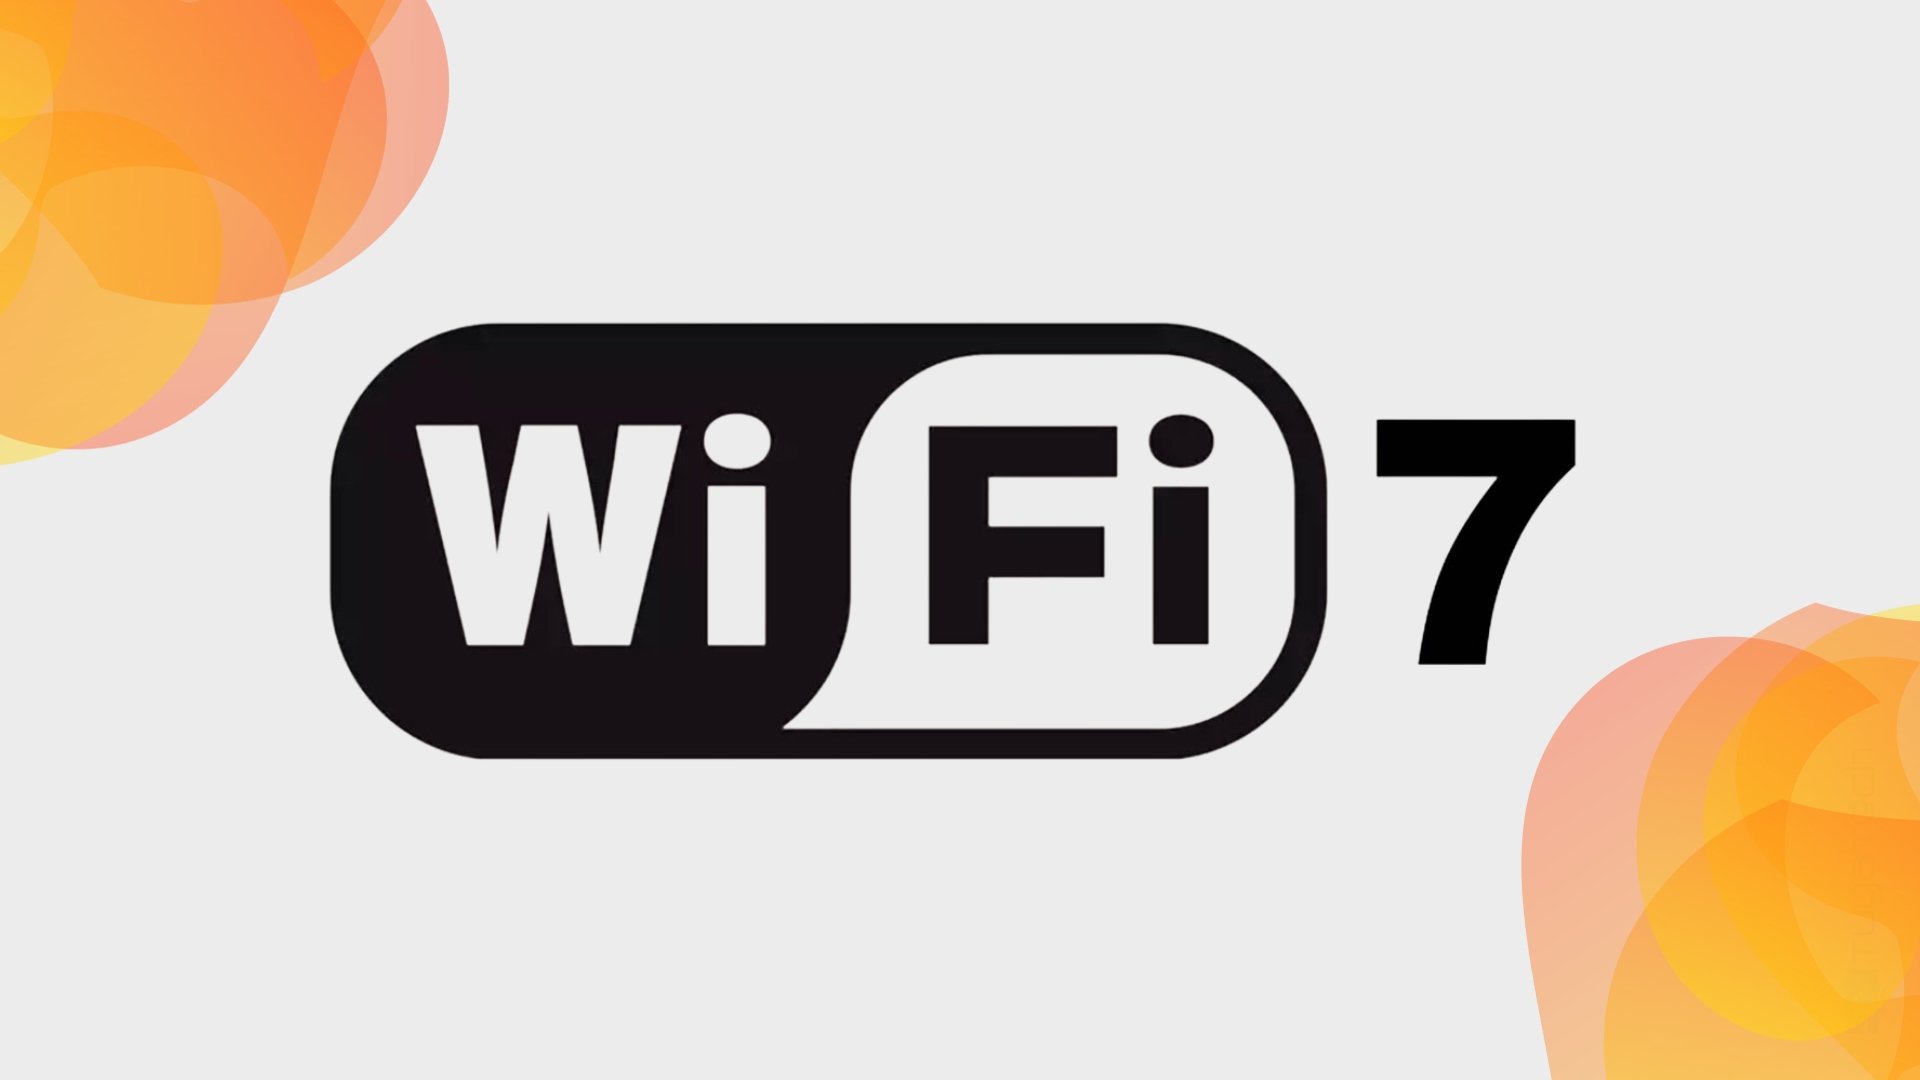 Logo do WiFi 7